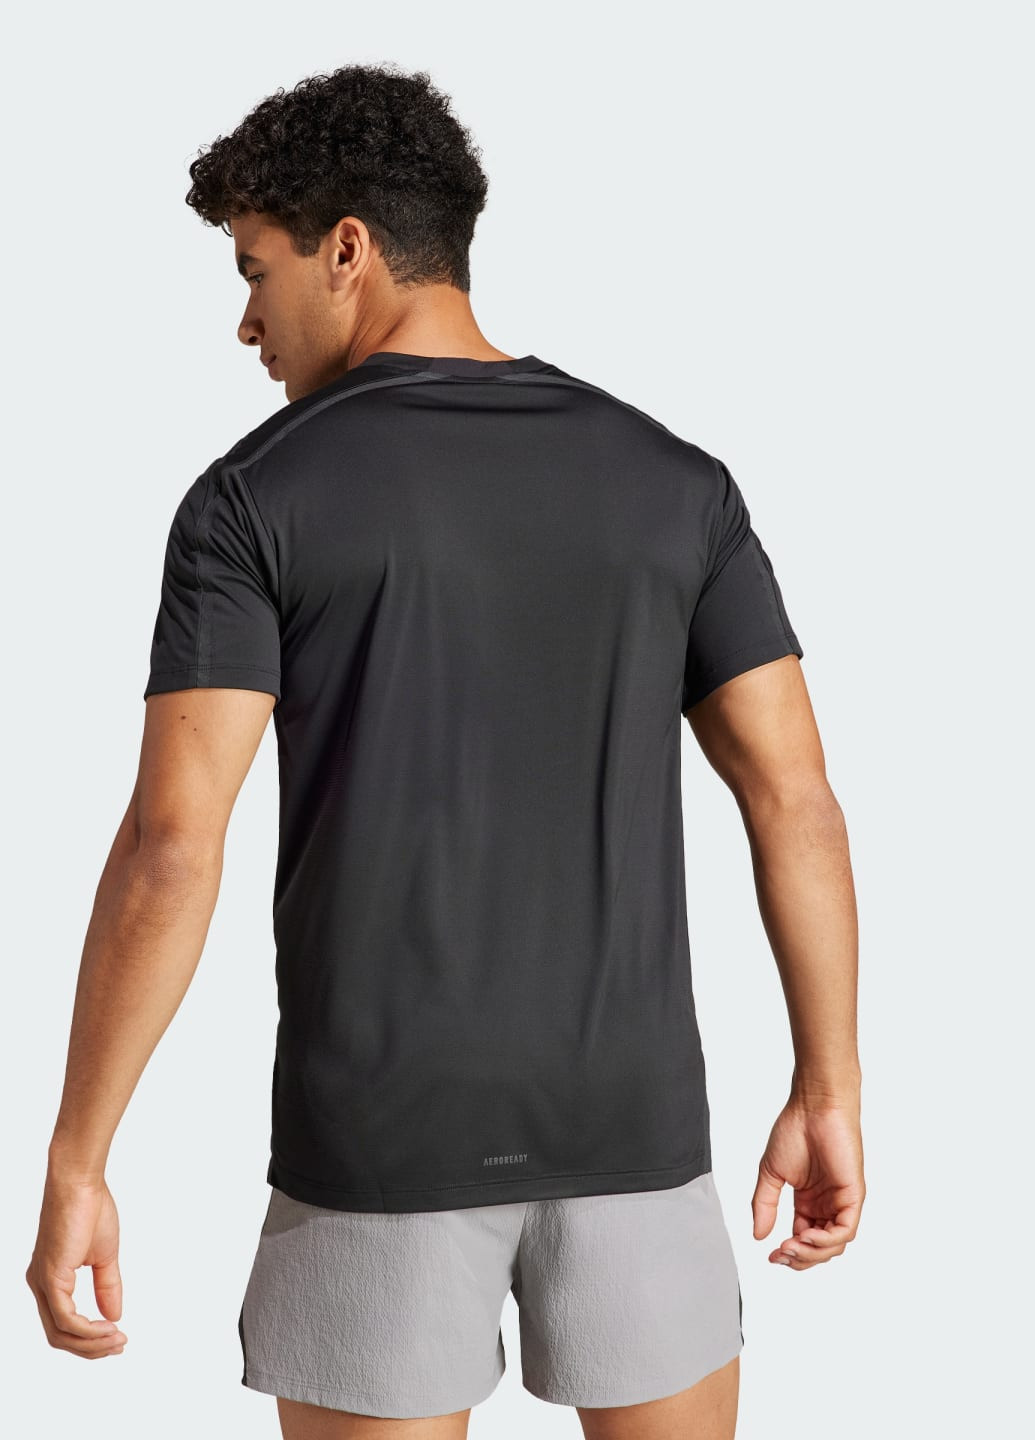 Черная футболка designed for training adistrong workout adidas